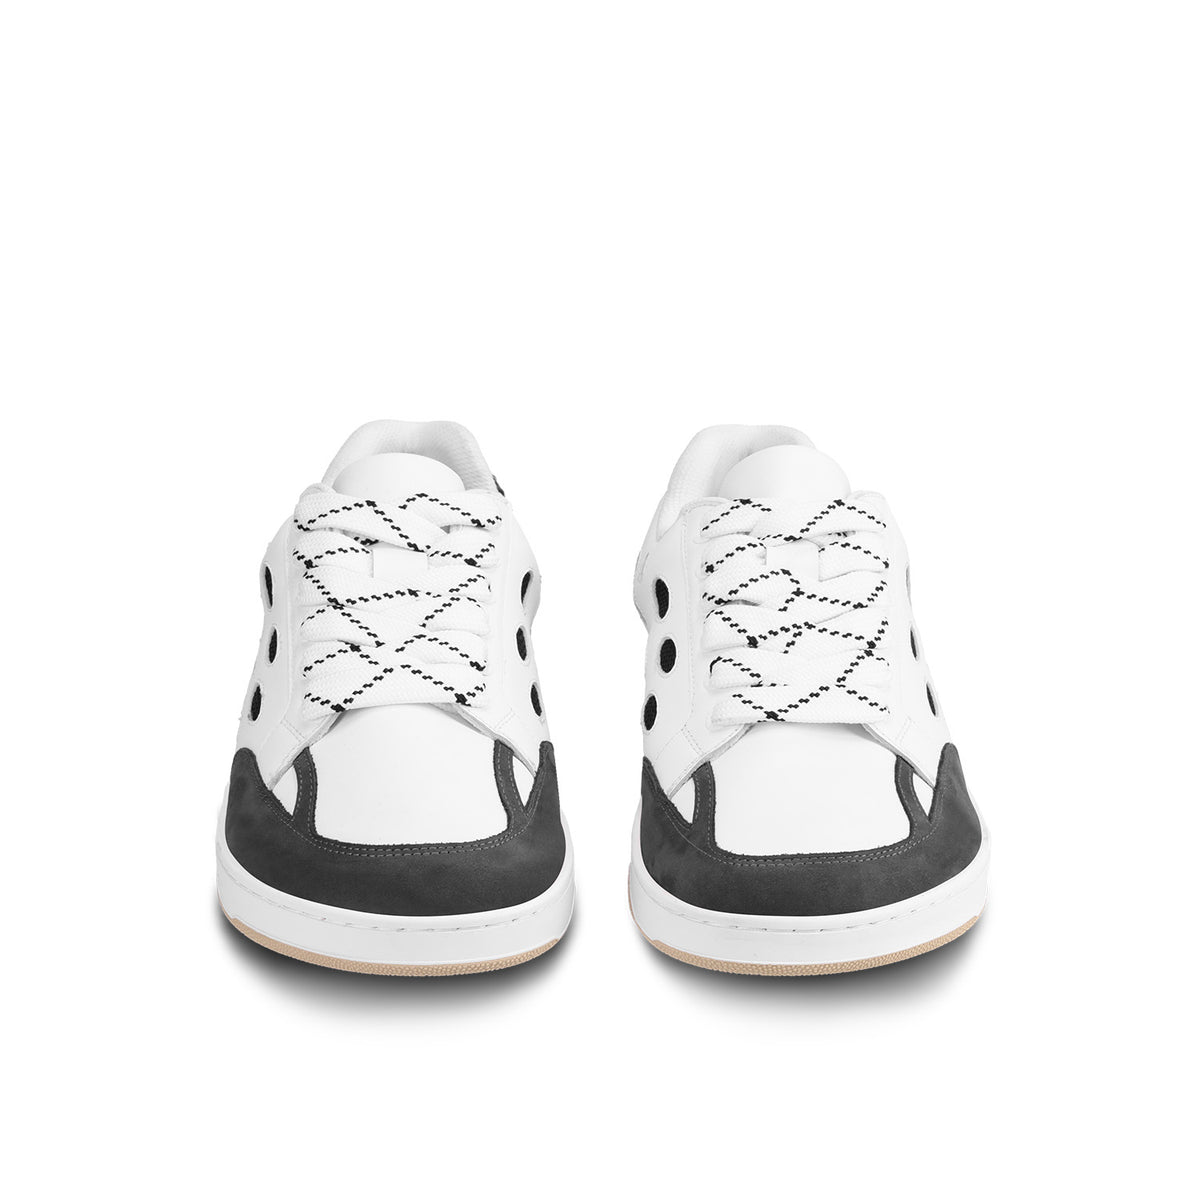 Barefoot Sneakers Barebarics Fusion - White & Charcoal 4  - OzBarefoot